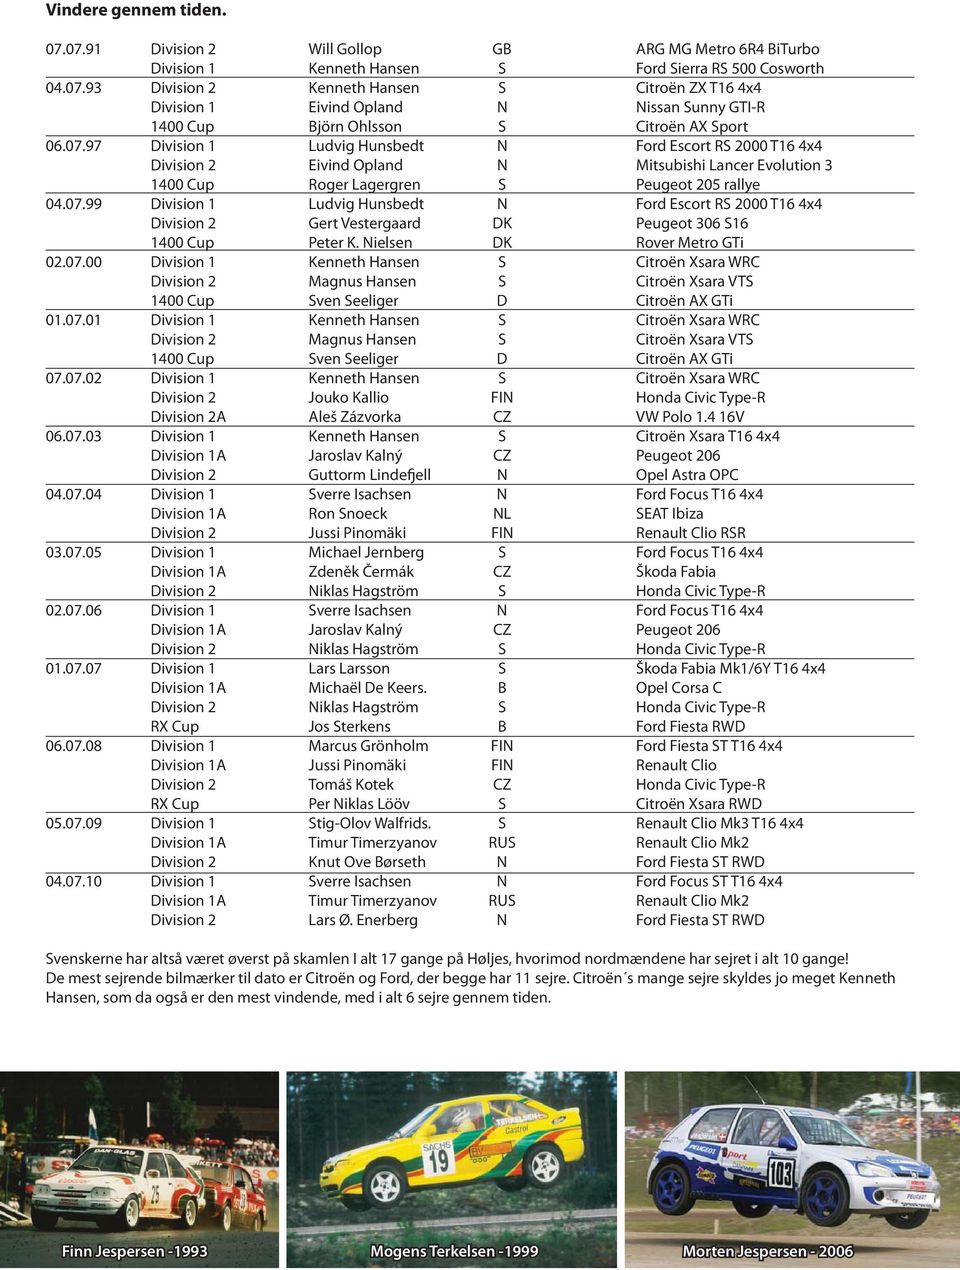 Nielsen DK Rover Metro GTi 02.07.00 Division 1 Kenneth Hansen S Citroën Xsara WRC Division 2 Magnus Hansen S Citroën Xsara VTS 1400 Cup Sven Seeliger D Citroën AX GTi 01.07.01 Division 1 Kenneth Hansen S Citroën Xsara WRC Division 2 Magnus Hansen S Citroën Xsara VTS 1400 Cup Sven Seeliger D Citroën AX GTi 07.